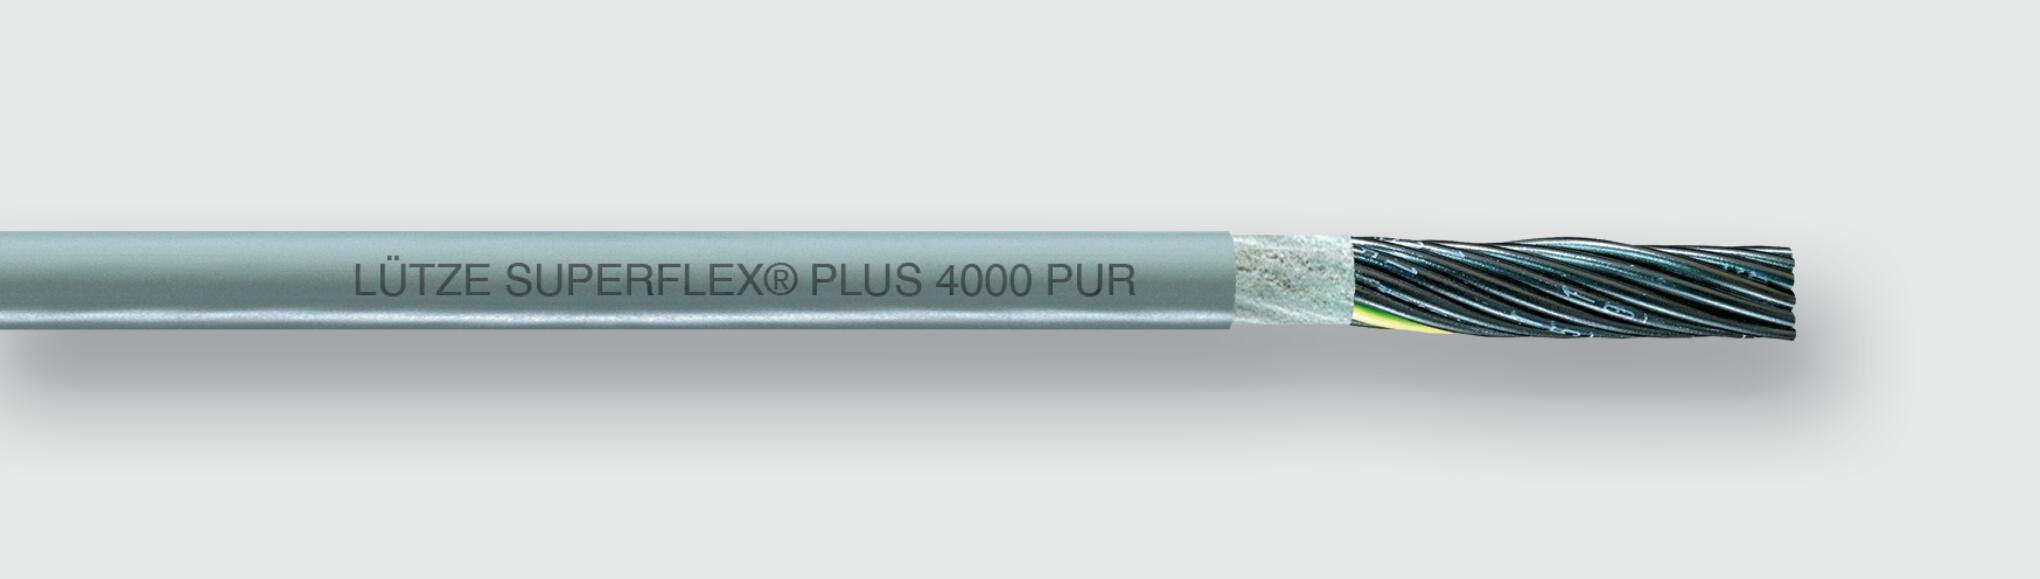 113110 - PUR control cables - C-track compatible